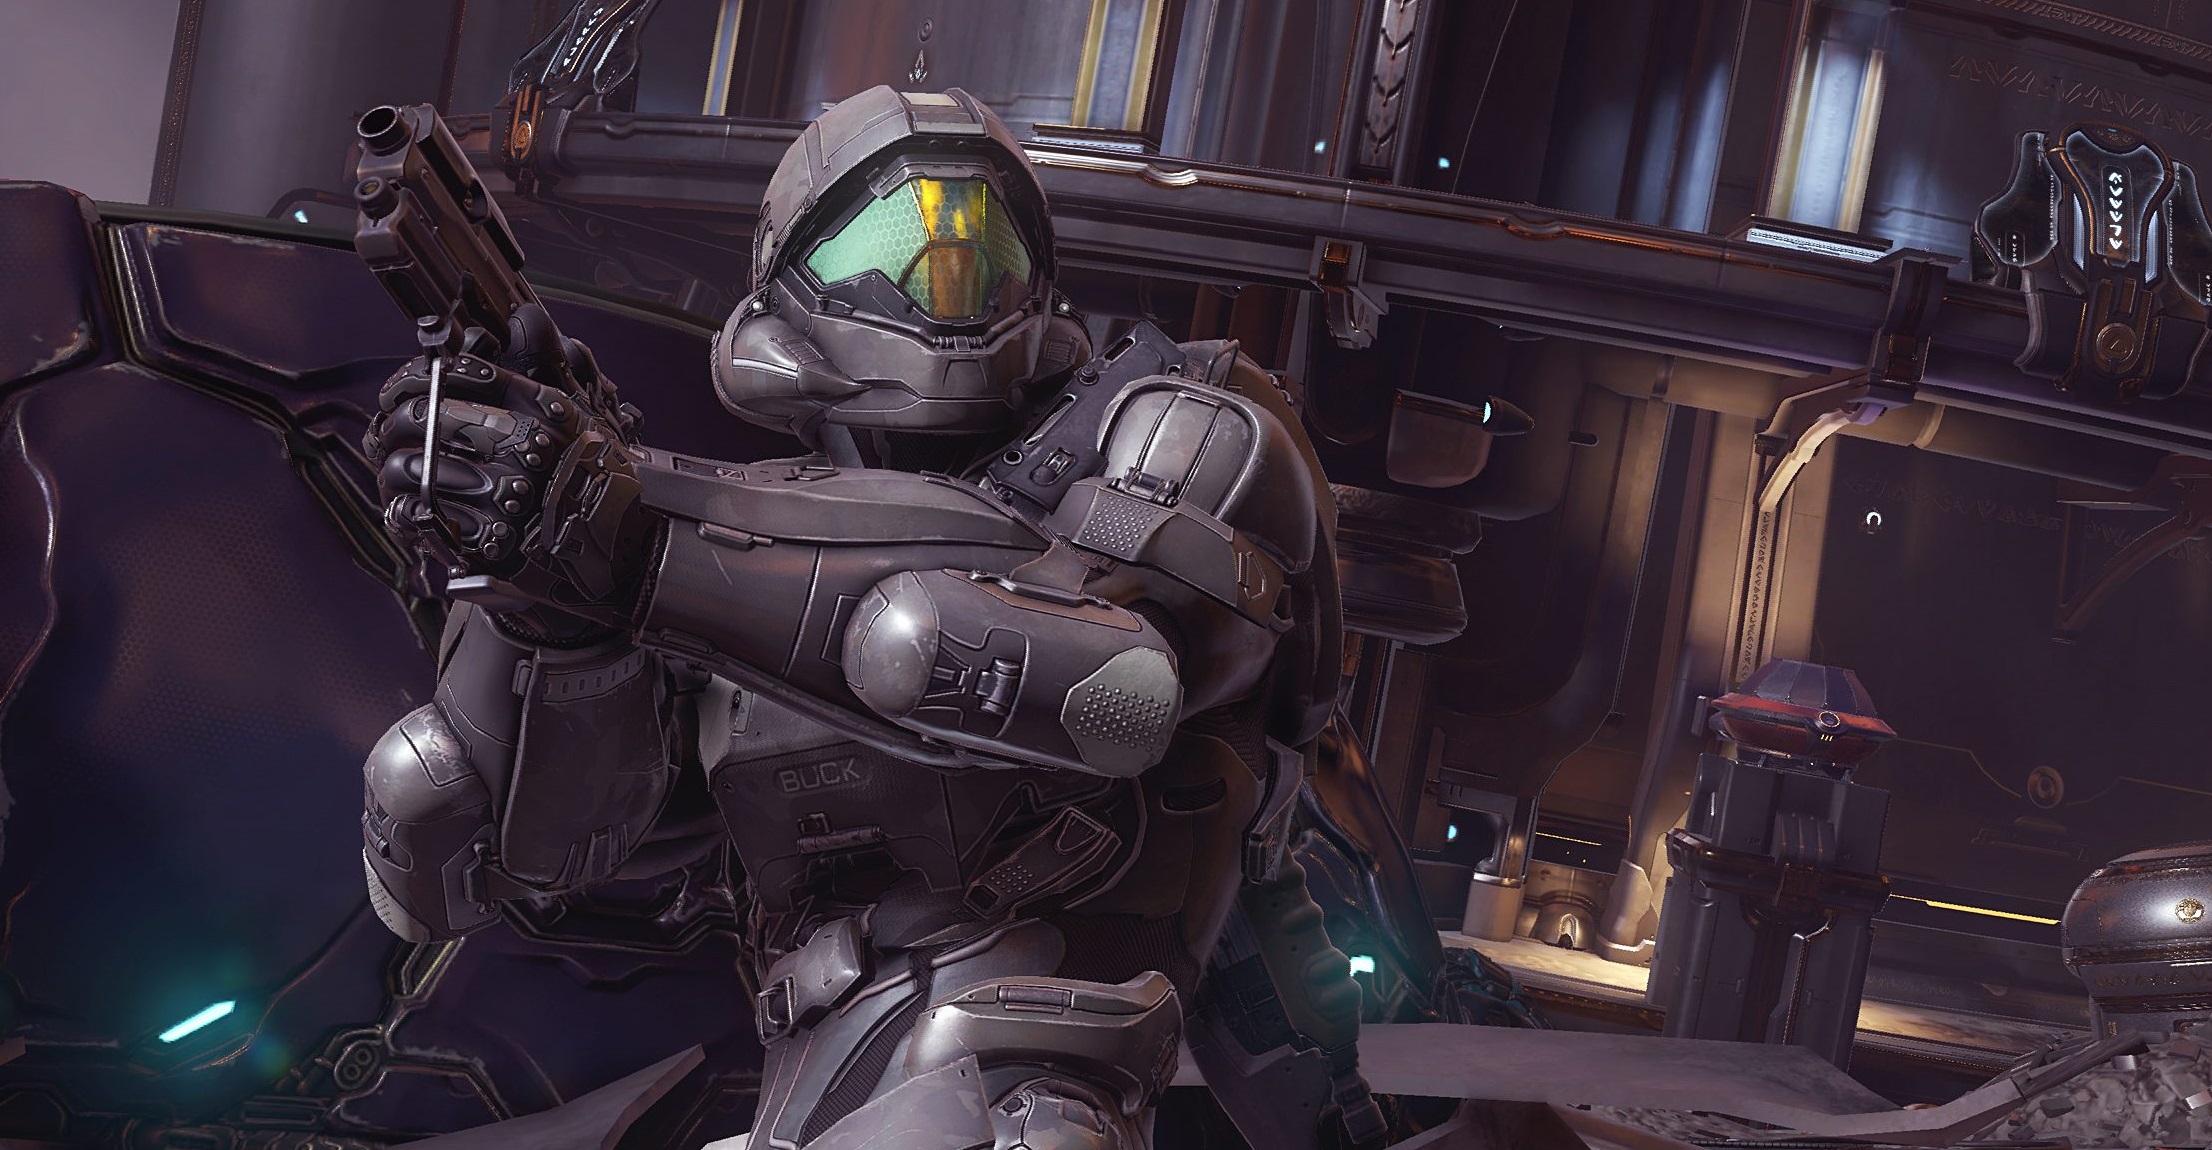 Video Games Halo Halo 5 Guardians Spartans Halo Gun Spartan Buck Futuristic Armor Video Game Man 2212x1150